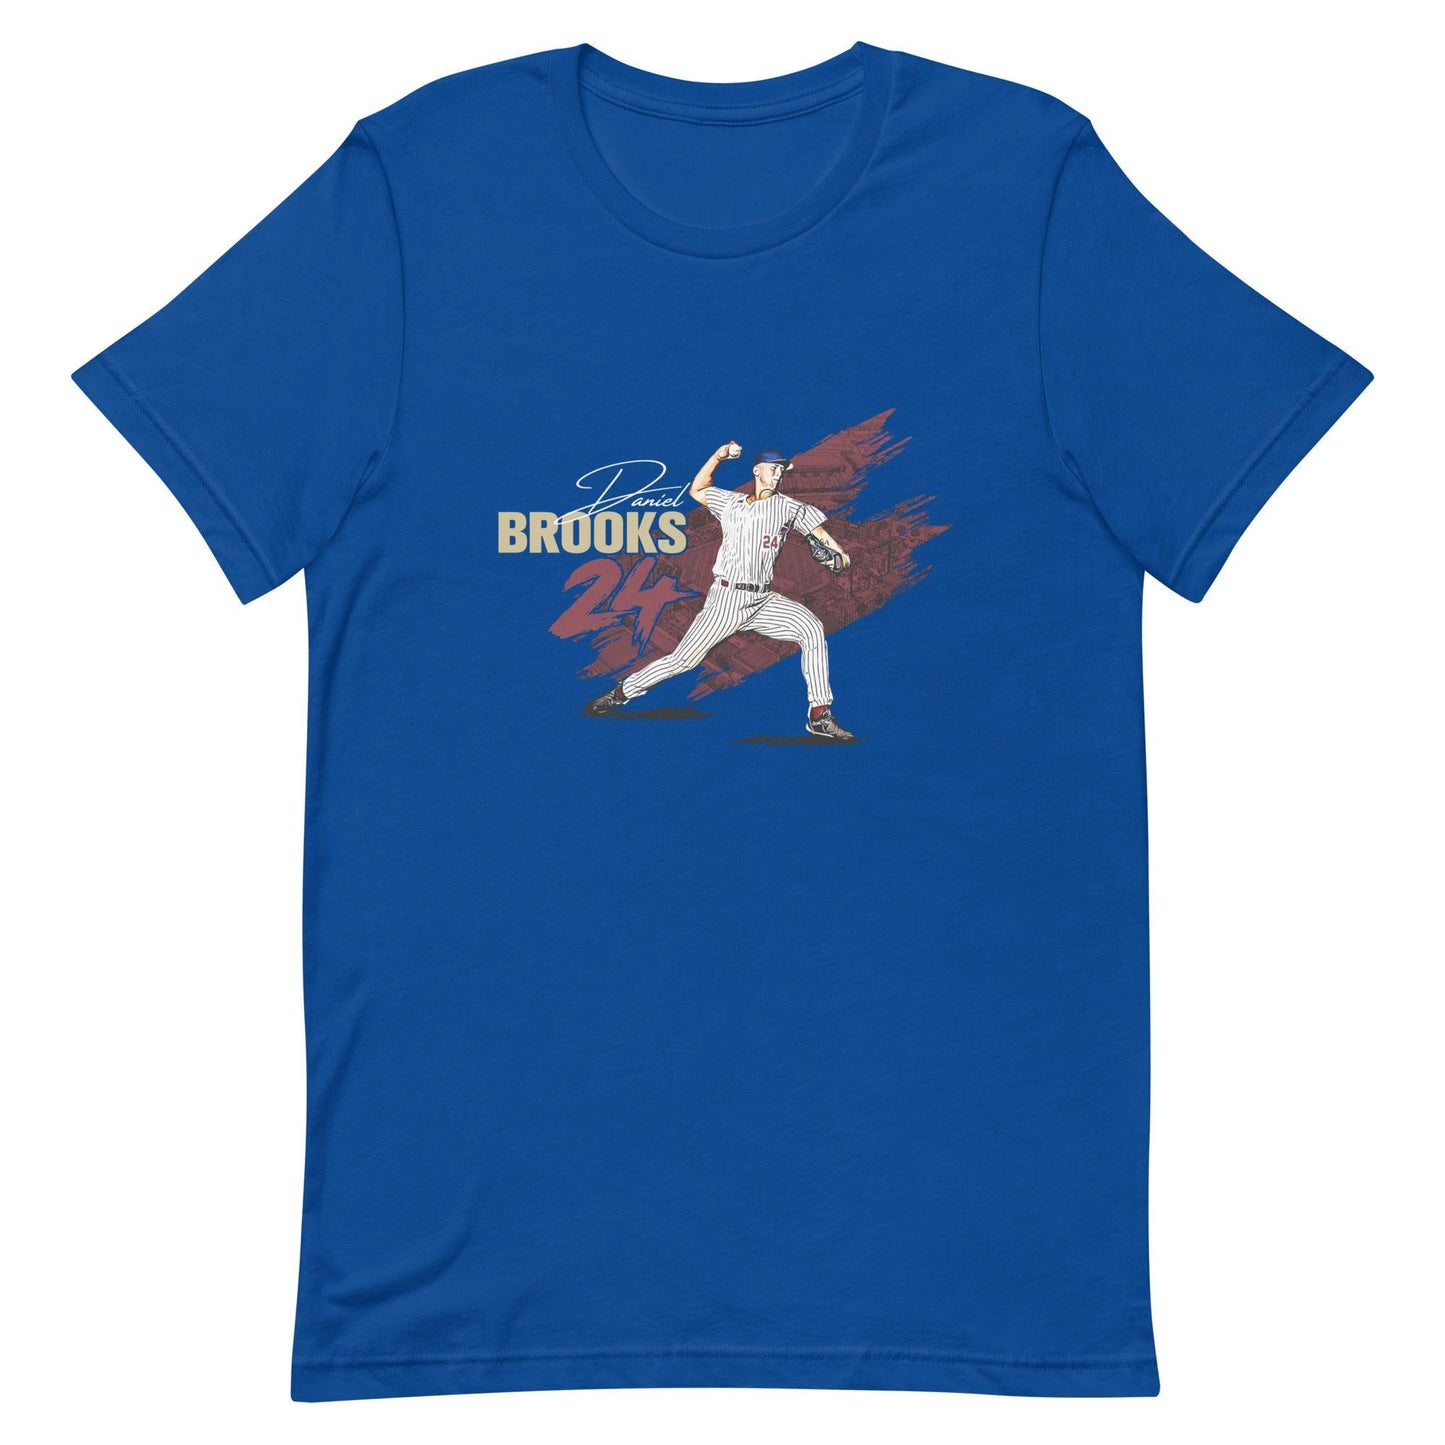 Daniel Brooks “Essential” t-shirt - Fan Arch